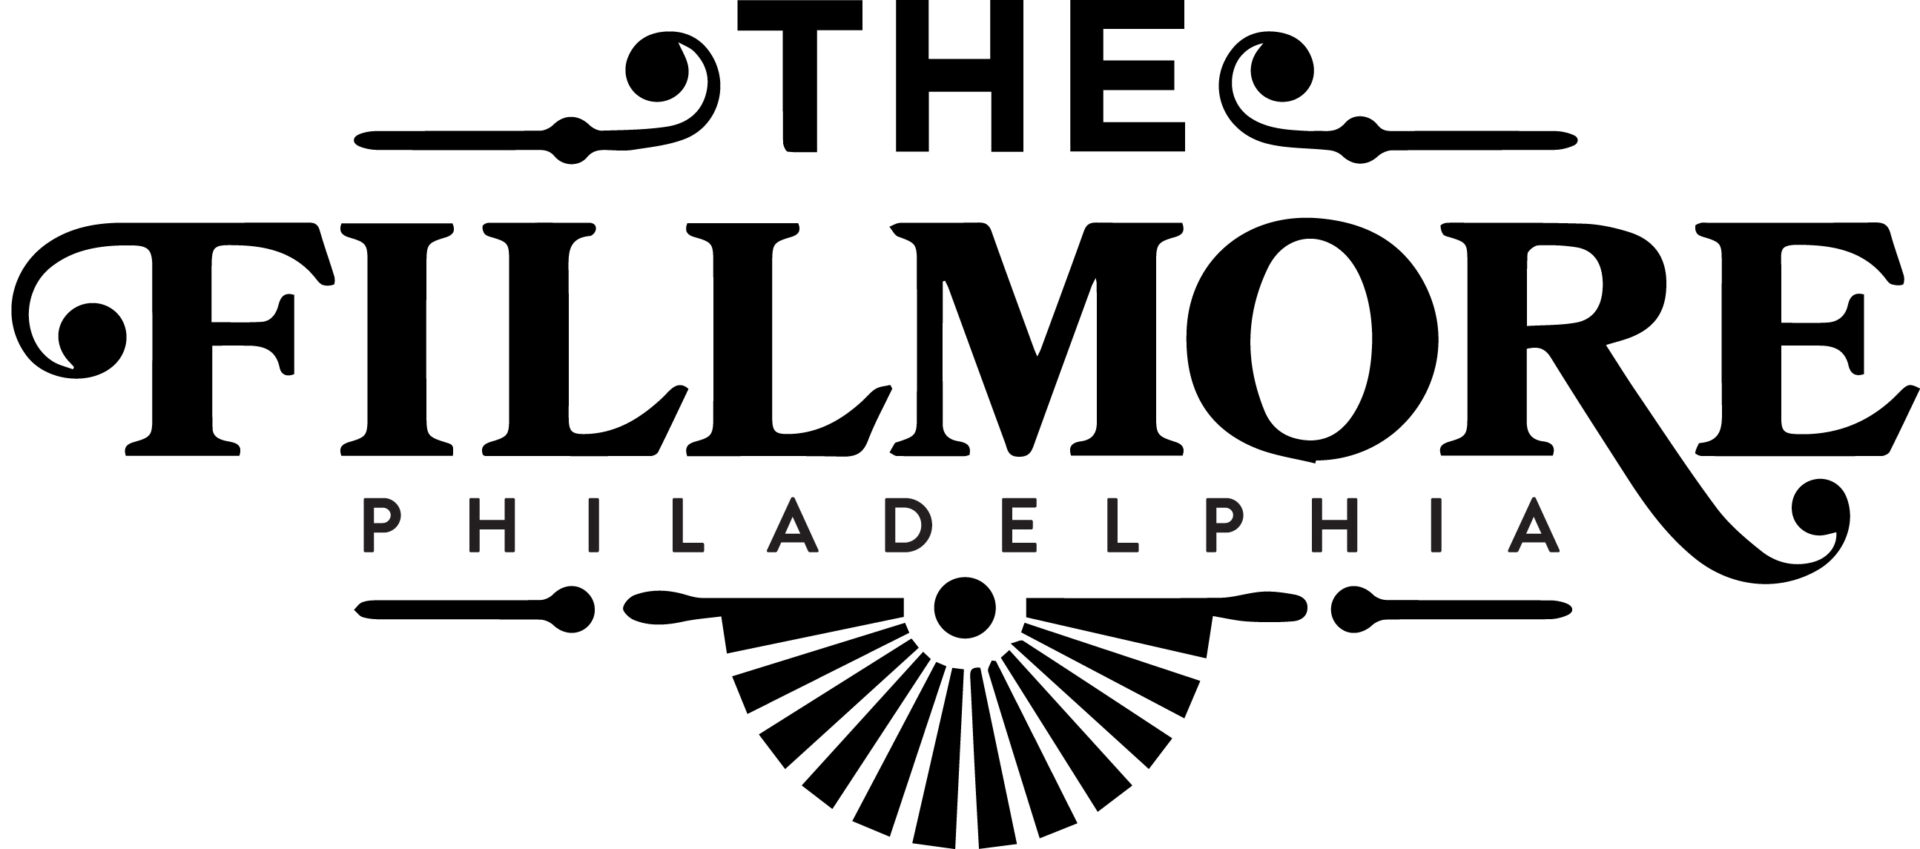 The Fillmore Philadelphia Logo in black and white color